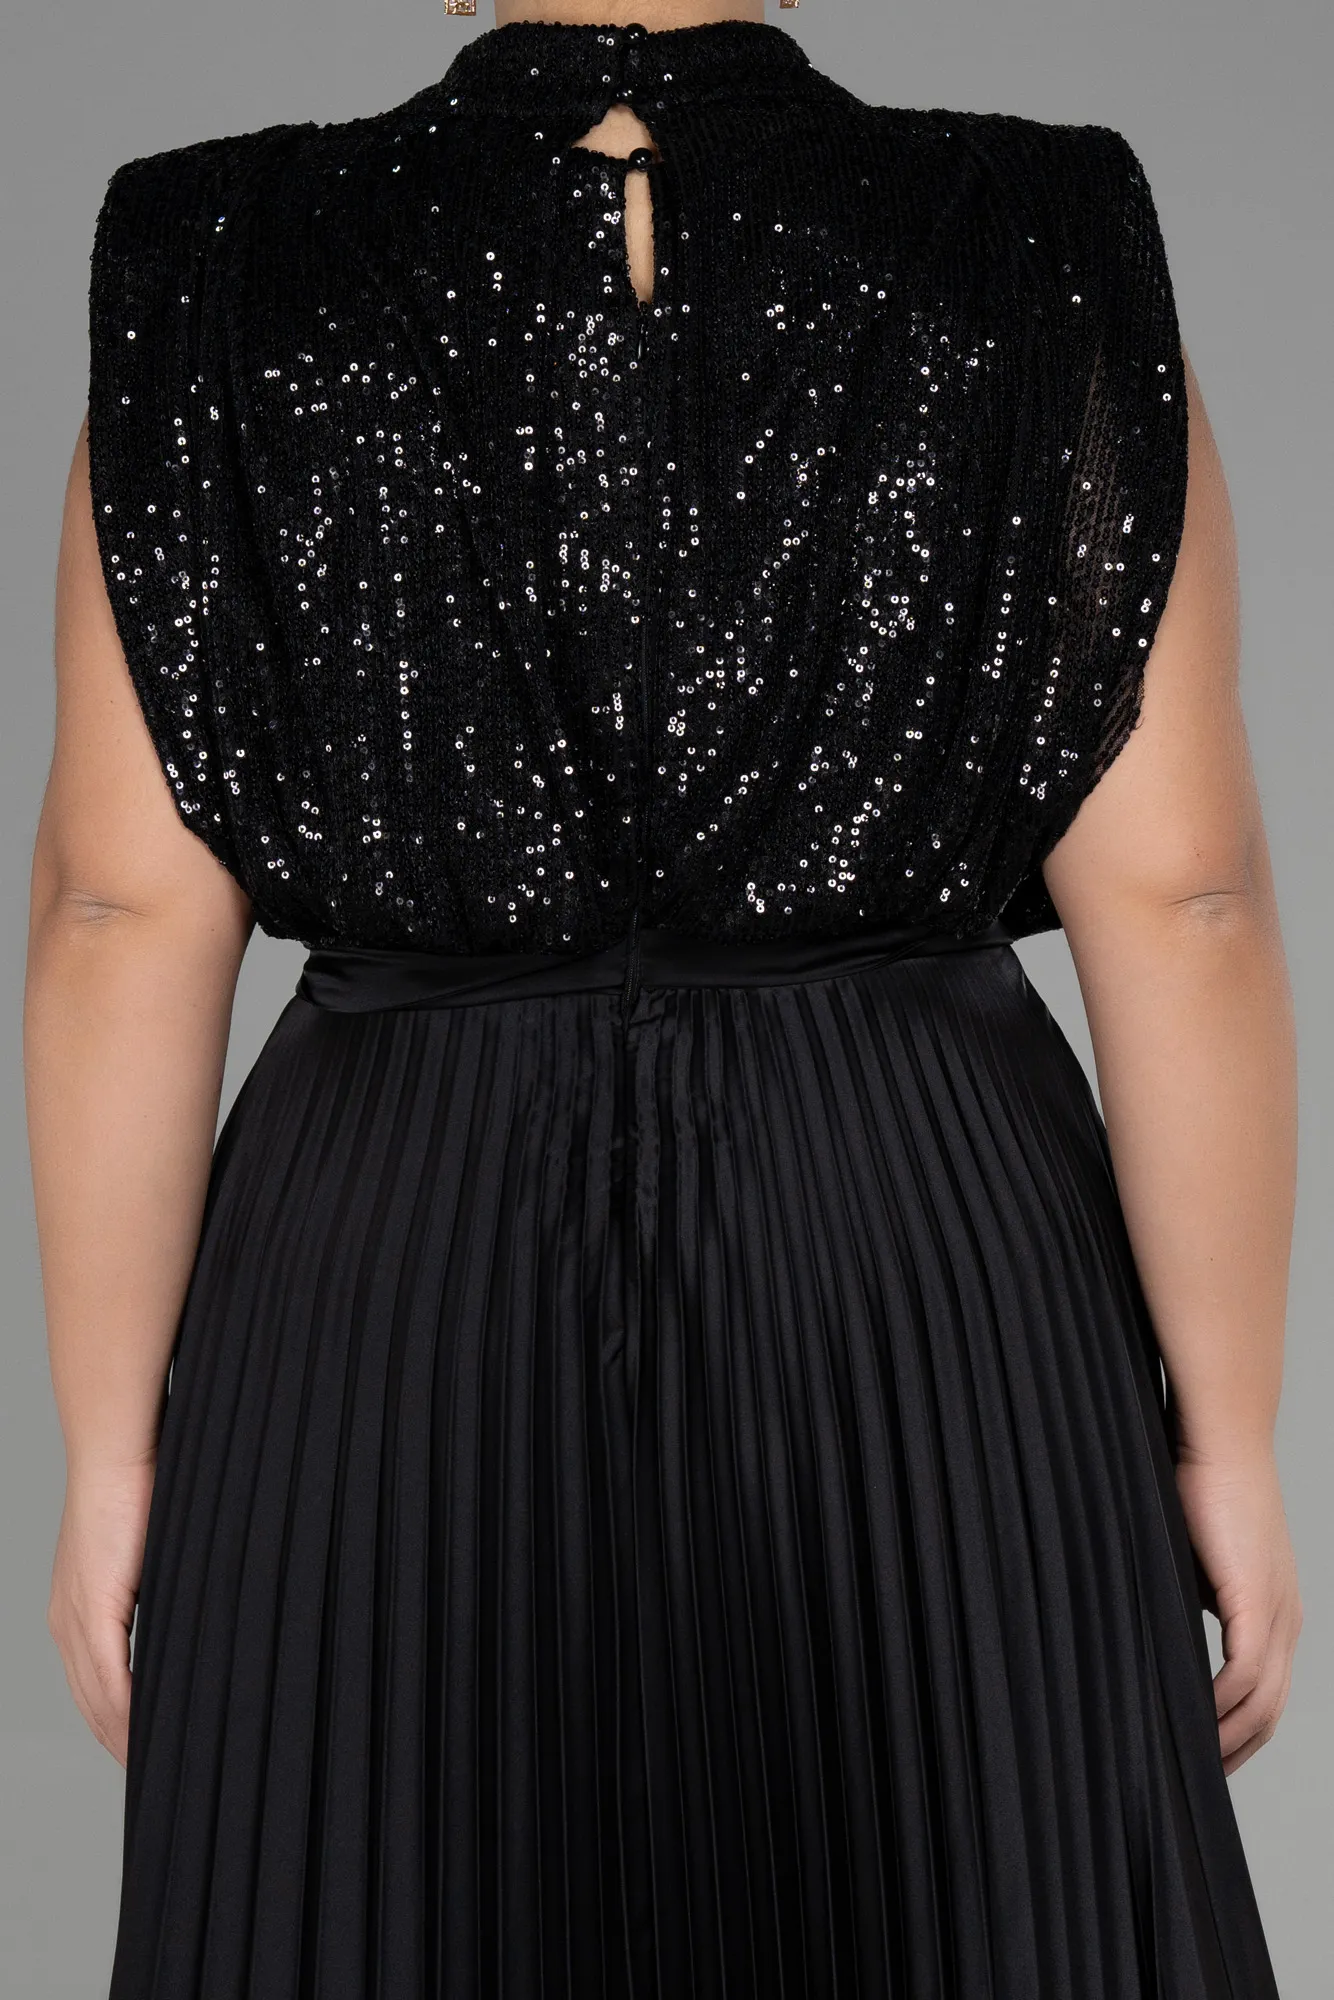 Black-Long Plus Size Evening Dress ABU3341